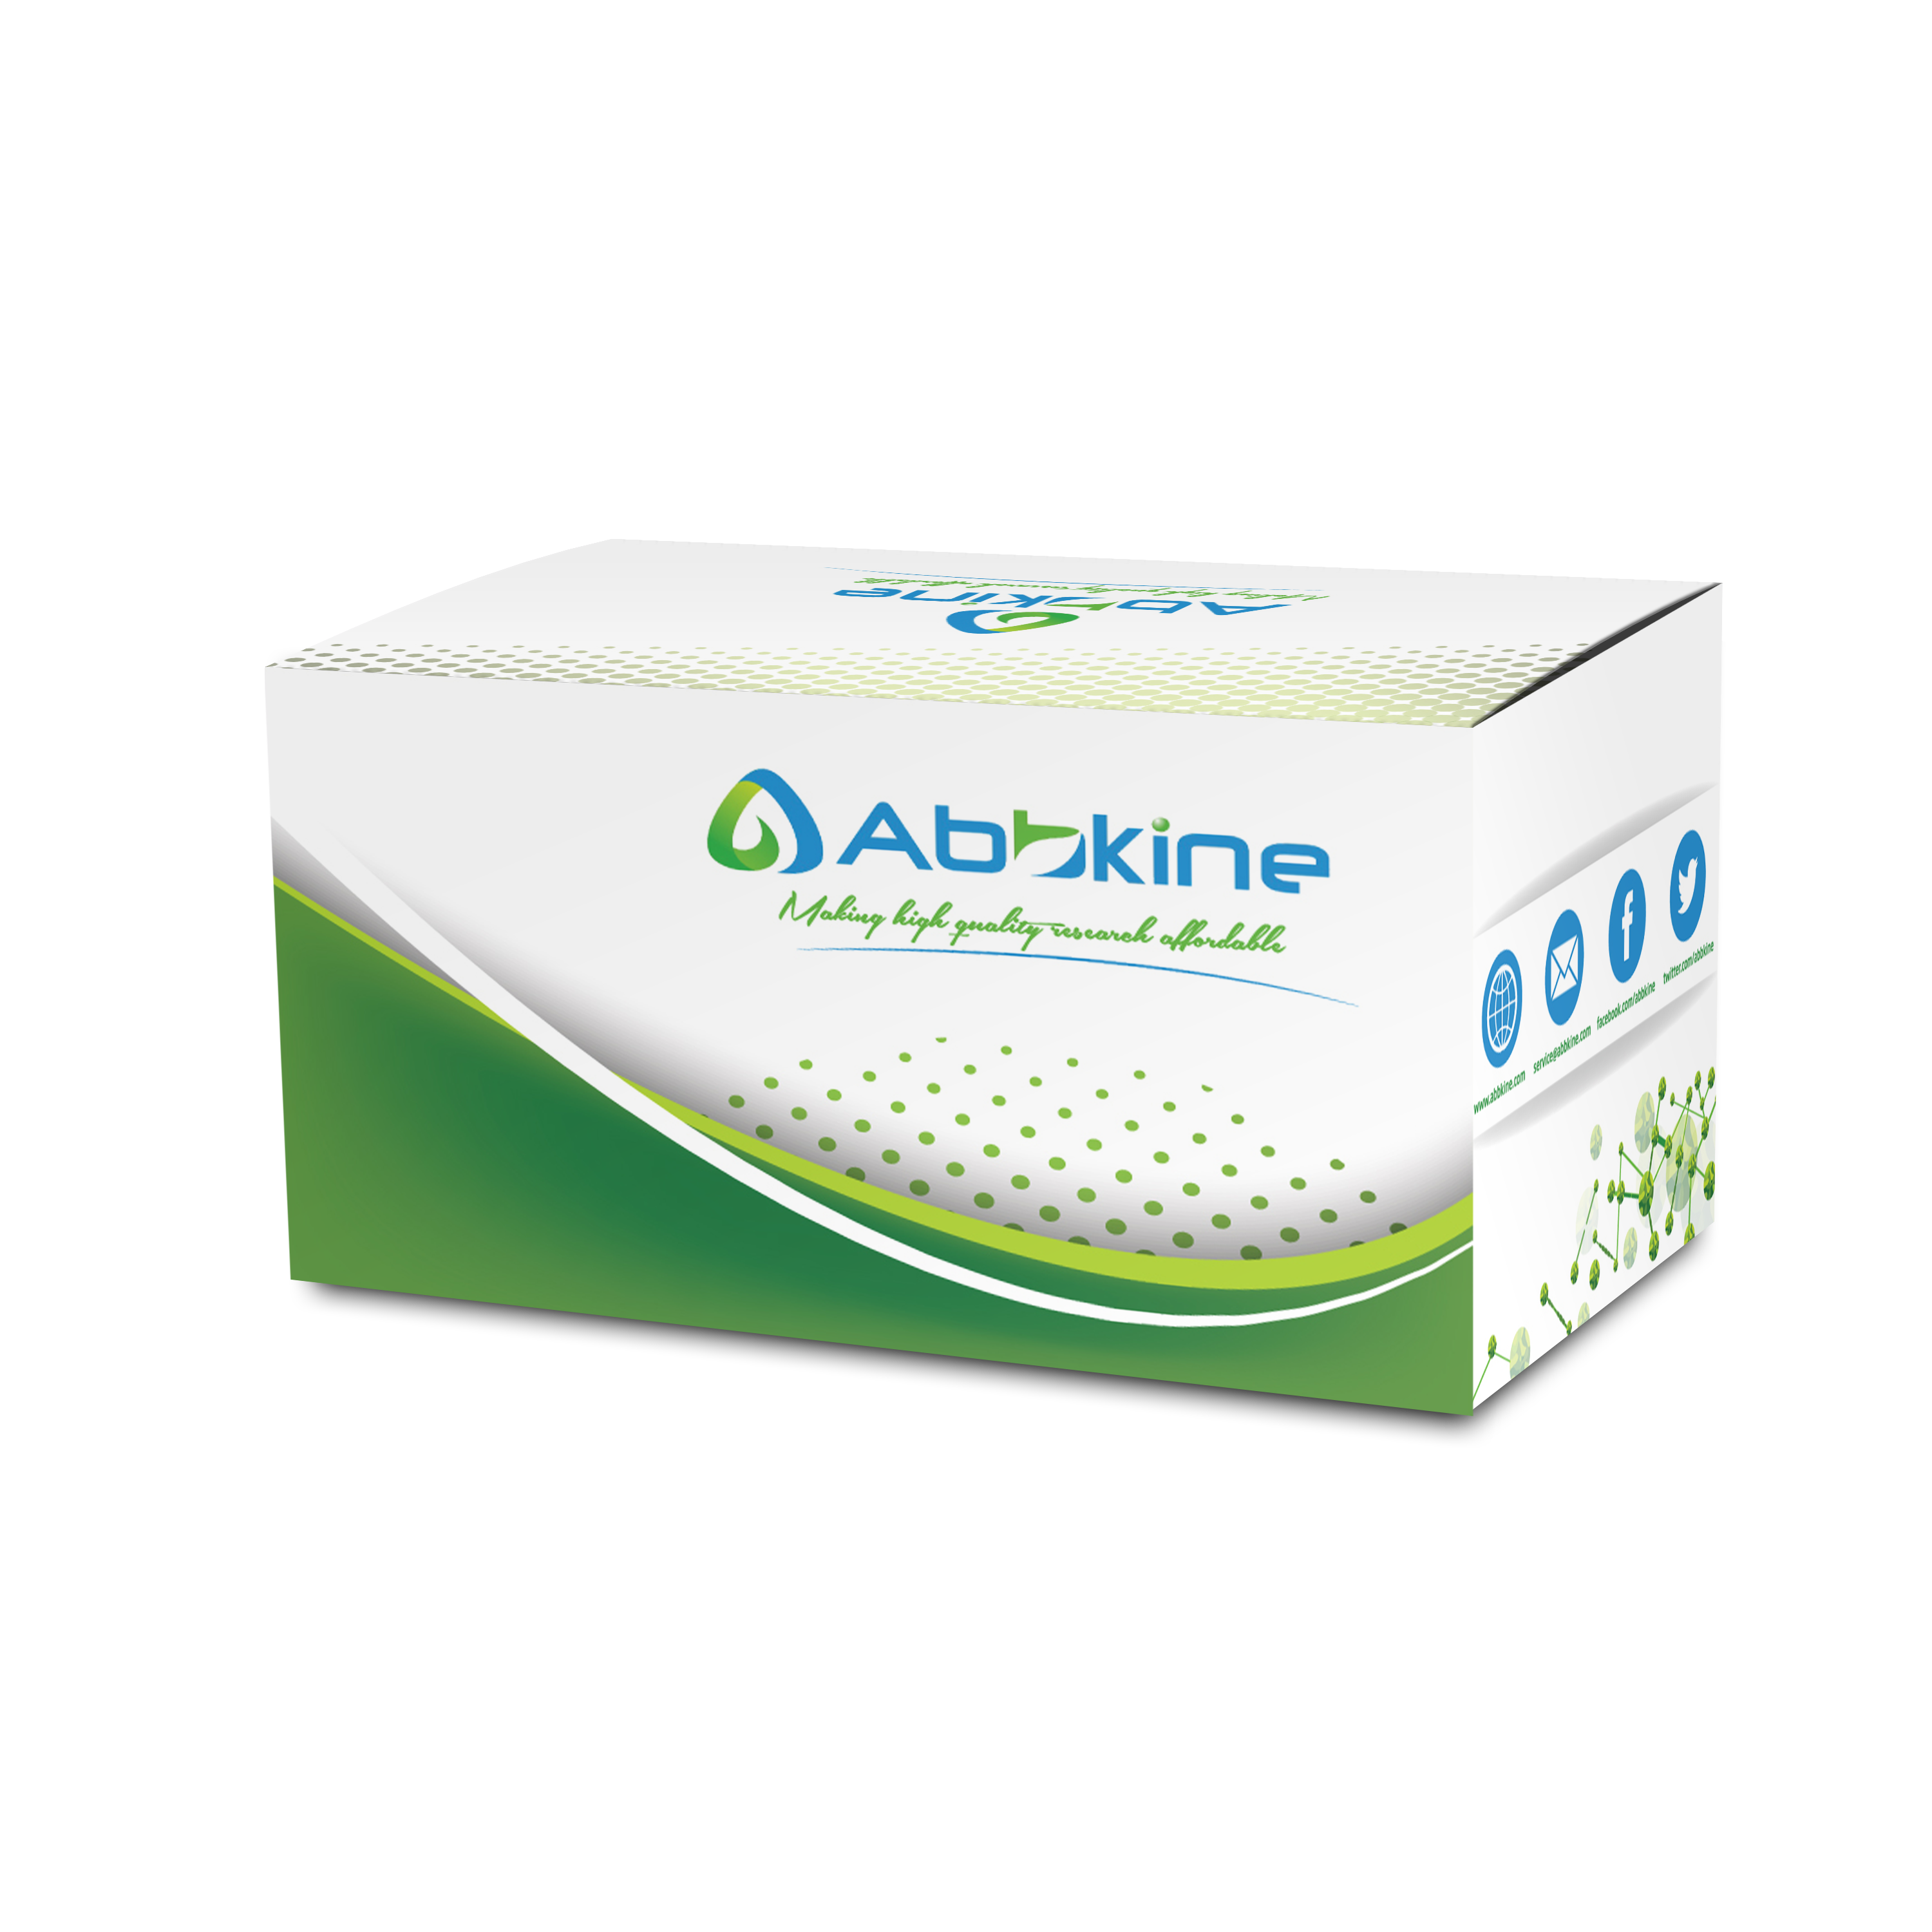 CheKine™ Micro Lipid Peroxidation (MDA) Assay kit